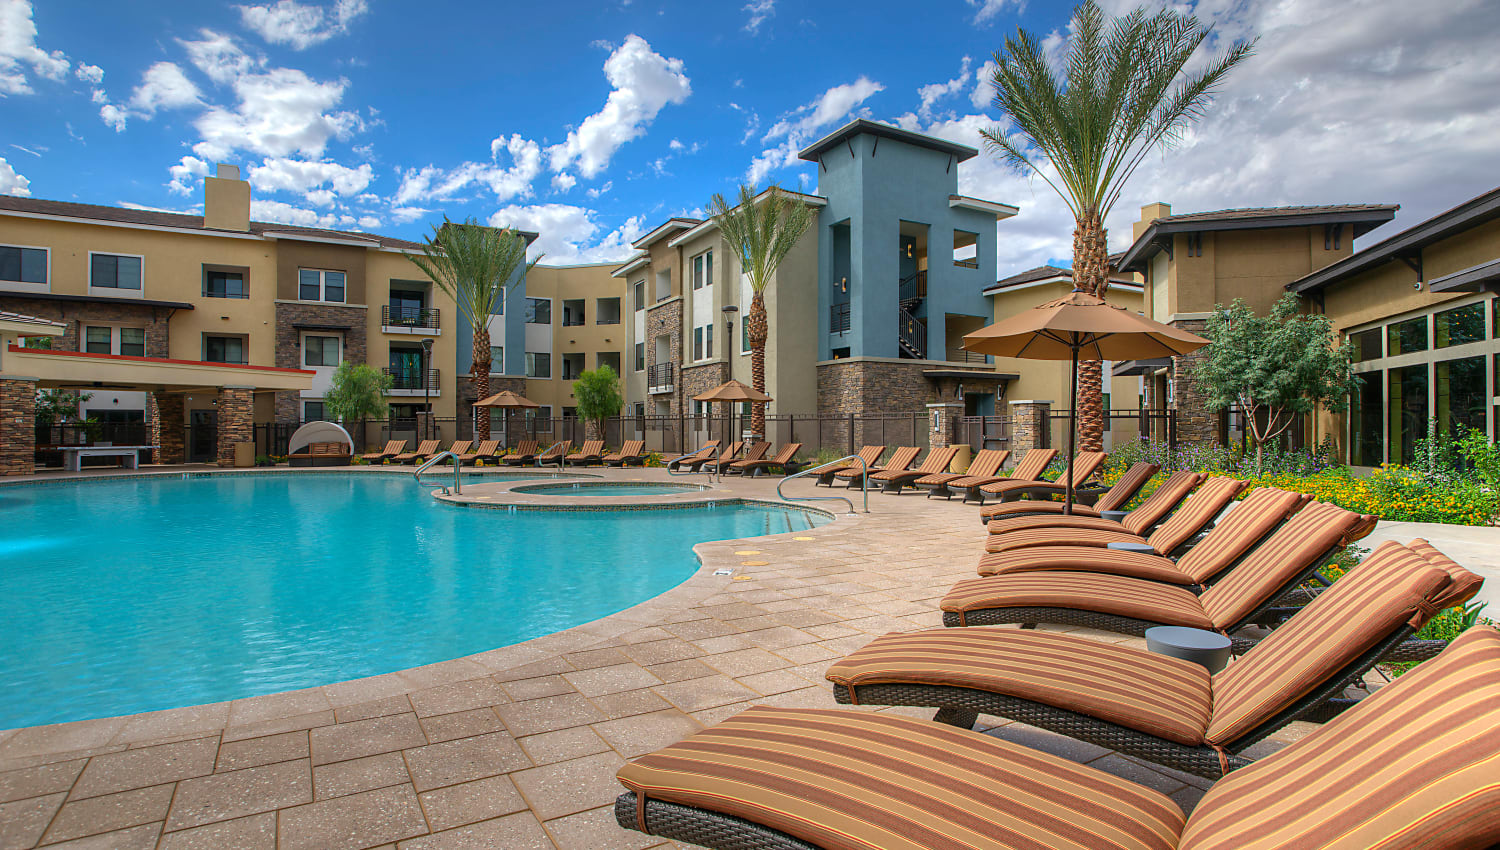 Luxurious lounge chairs along the resort-style swimming pool at Vistara at SanTan Village in Gilbert, Arizona